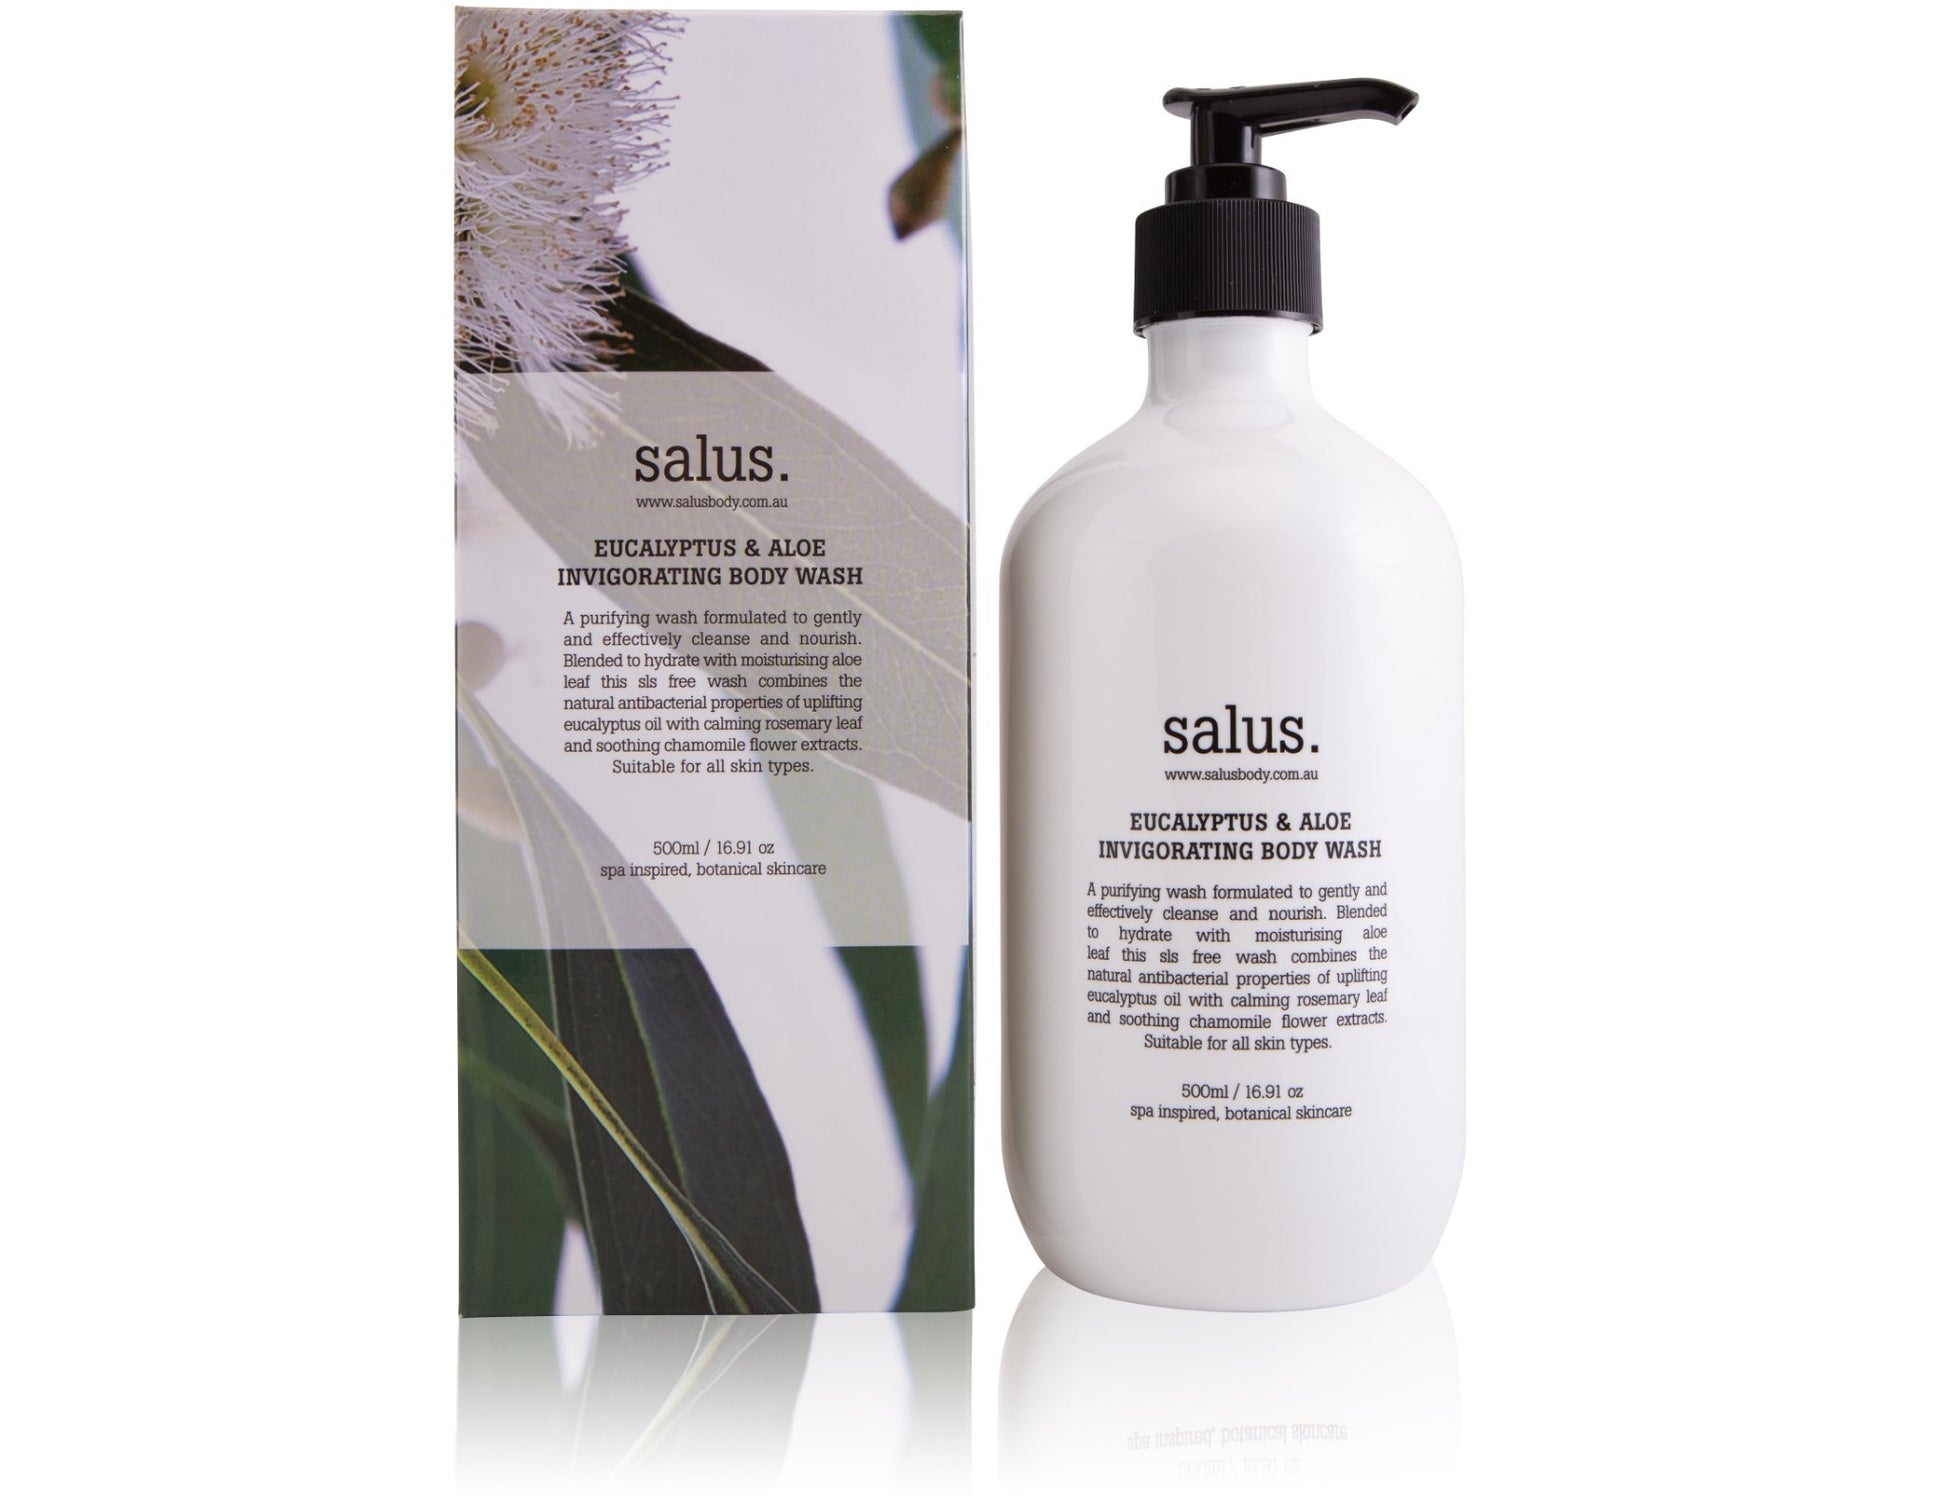 Salus Eucalyptus & Aloe Invigorating Body Wash 500ml Eclectopia Gifts and Specialty Homewares 